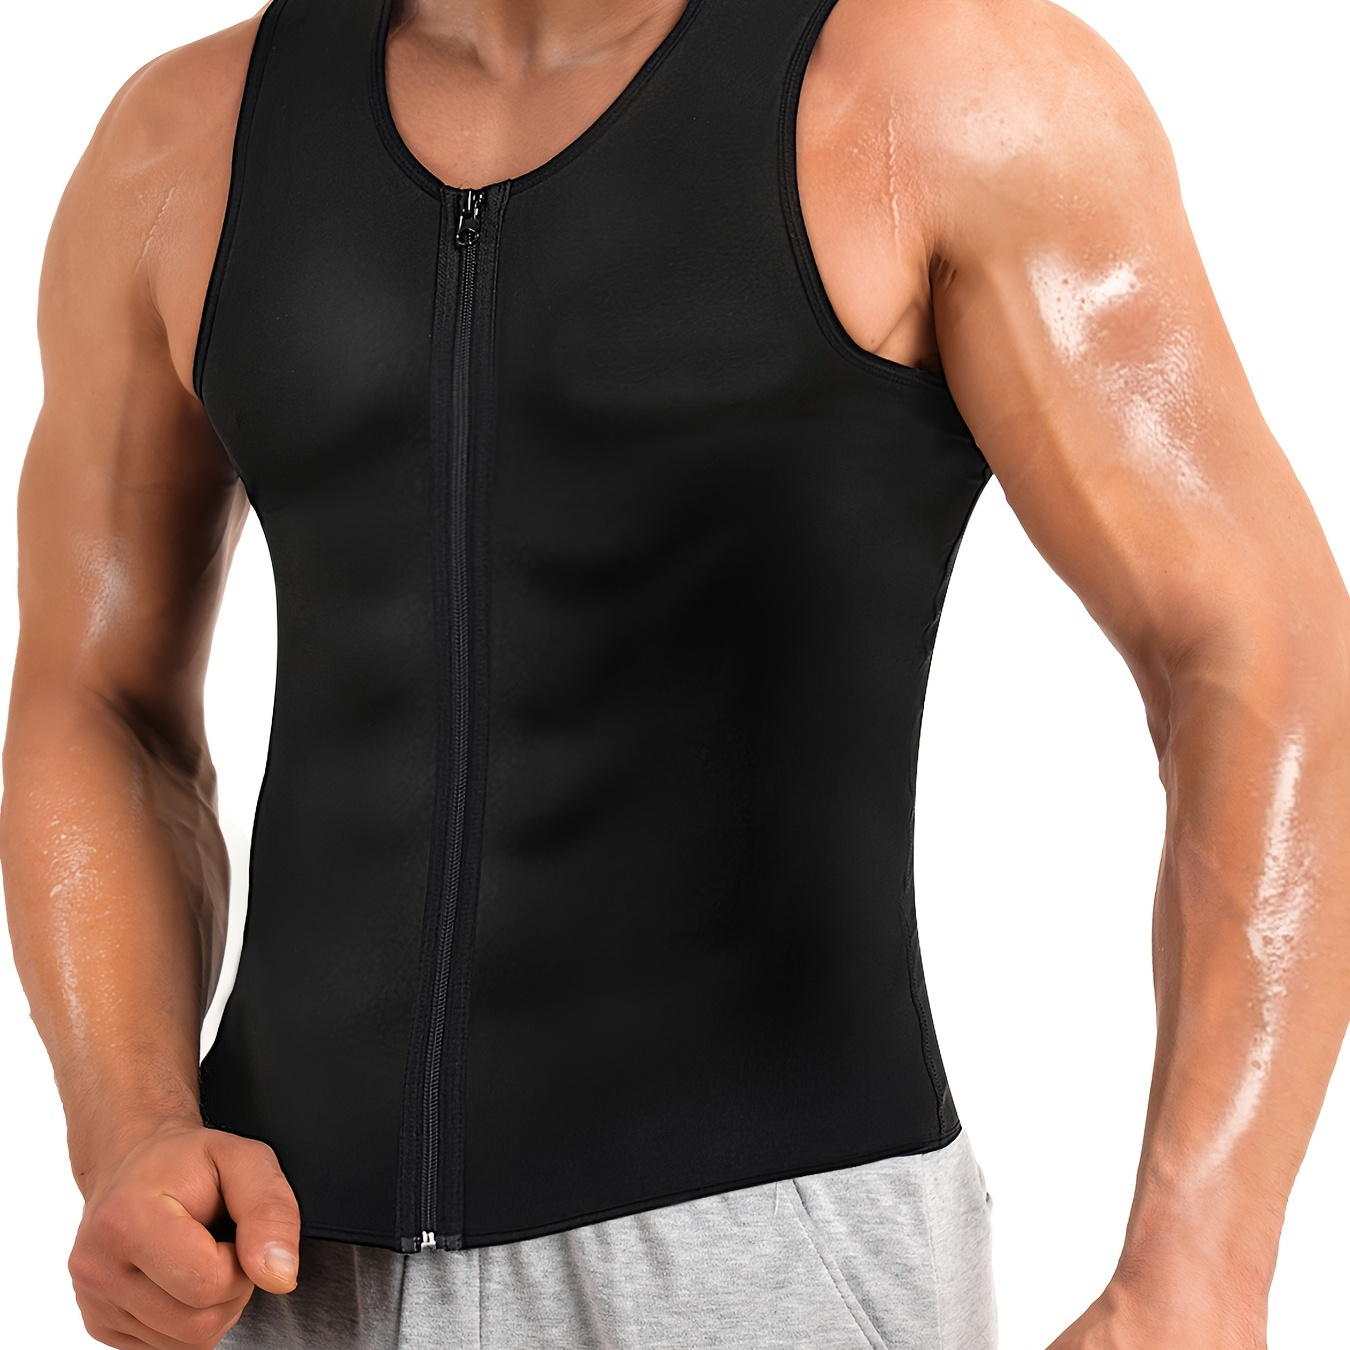 Men's Hot Sweat Sauna Zipper Tank Top Waist Shaper Vest for Weight Loss Hot  Neoprene Slimming Body Shaper Black(with Zip) M price in UAE,  UAE